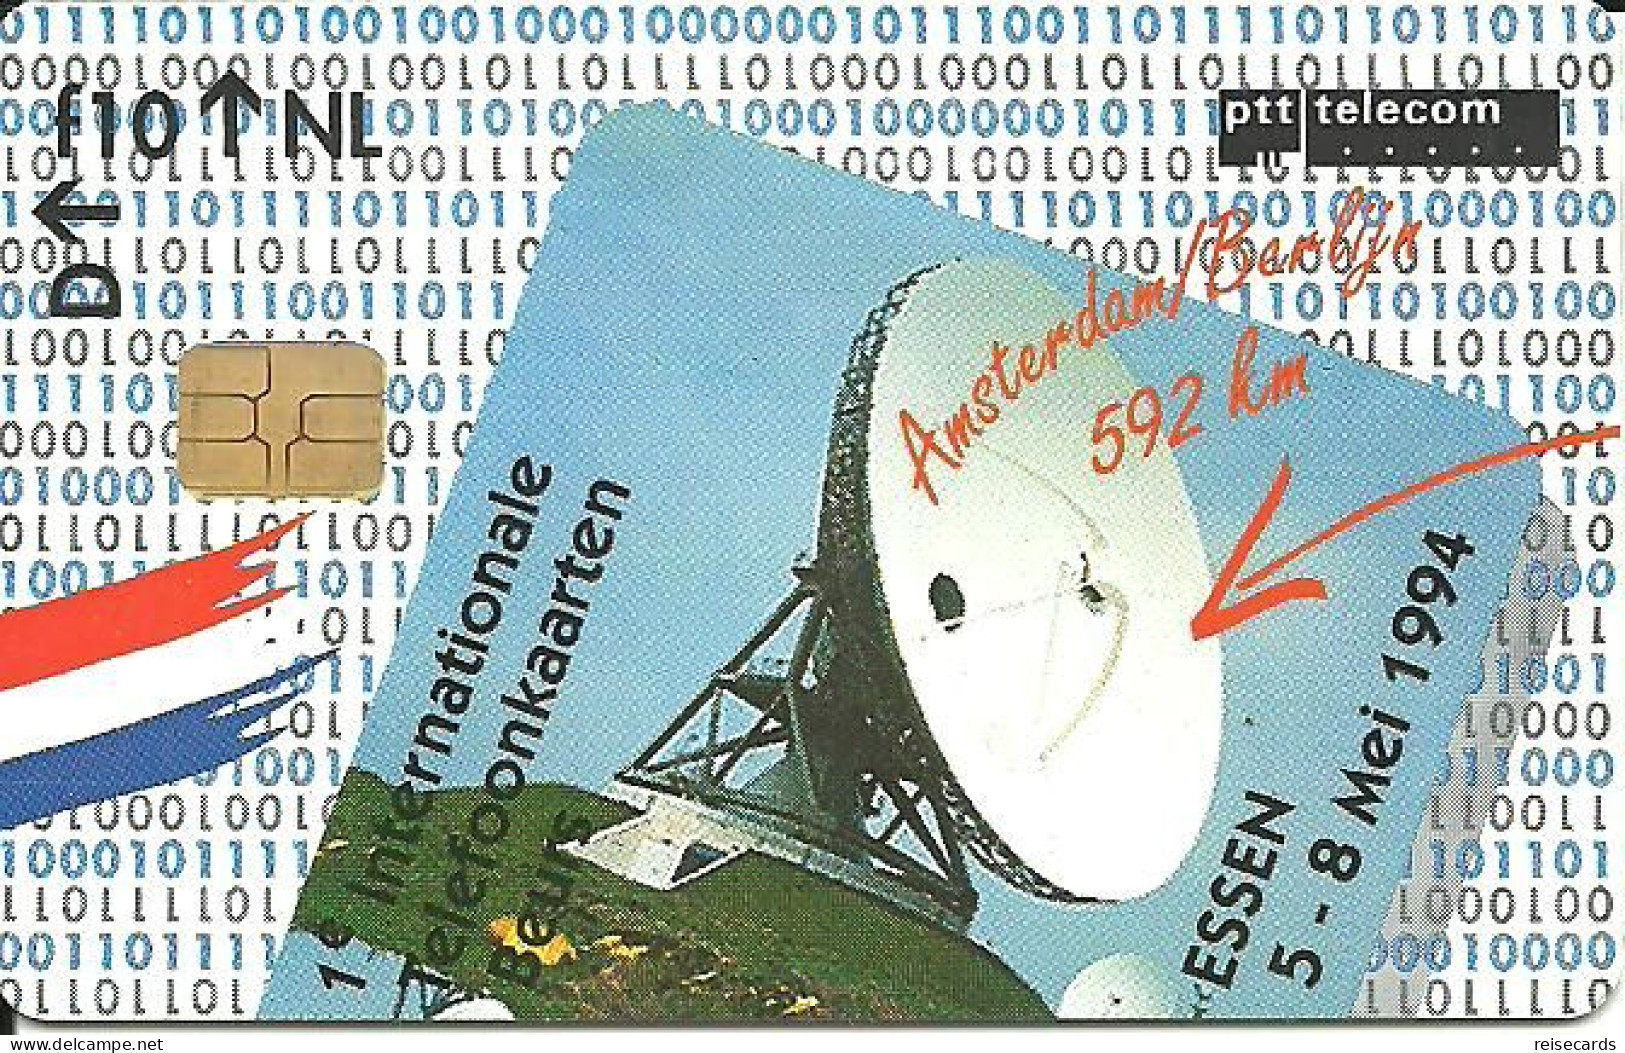 Netherlands: Ptt Telecom - 1994 1. Internationale Telefoonkaarten Beurs 94 Essen. Mint - öffentlich